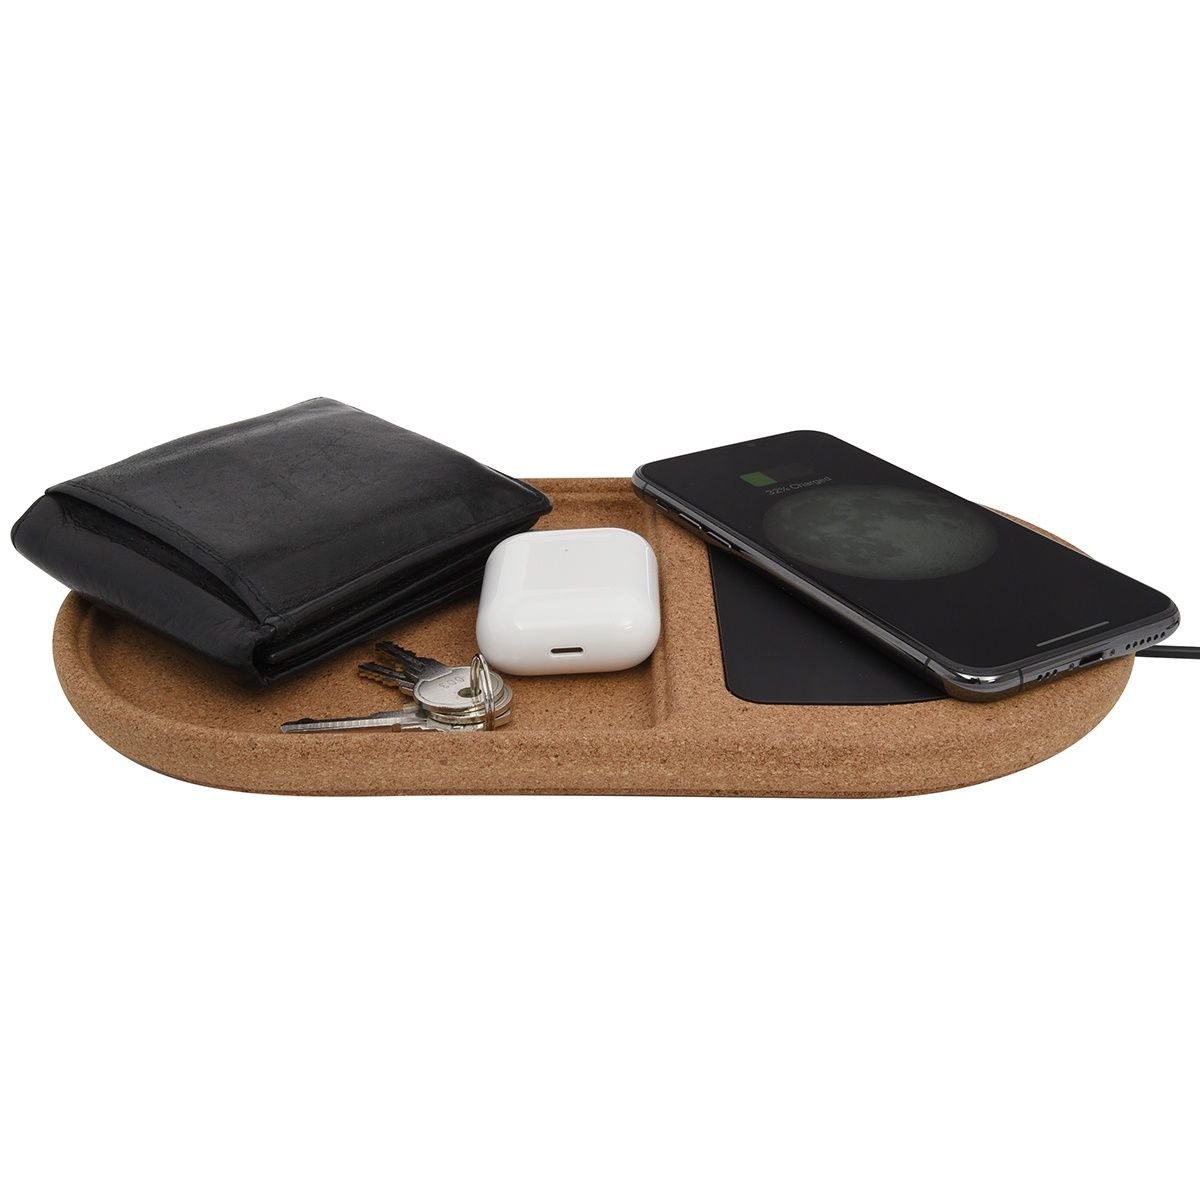 Wireless charging pad & Desktop Organizer